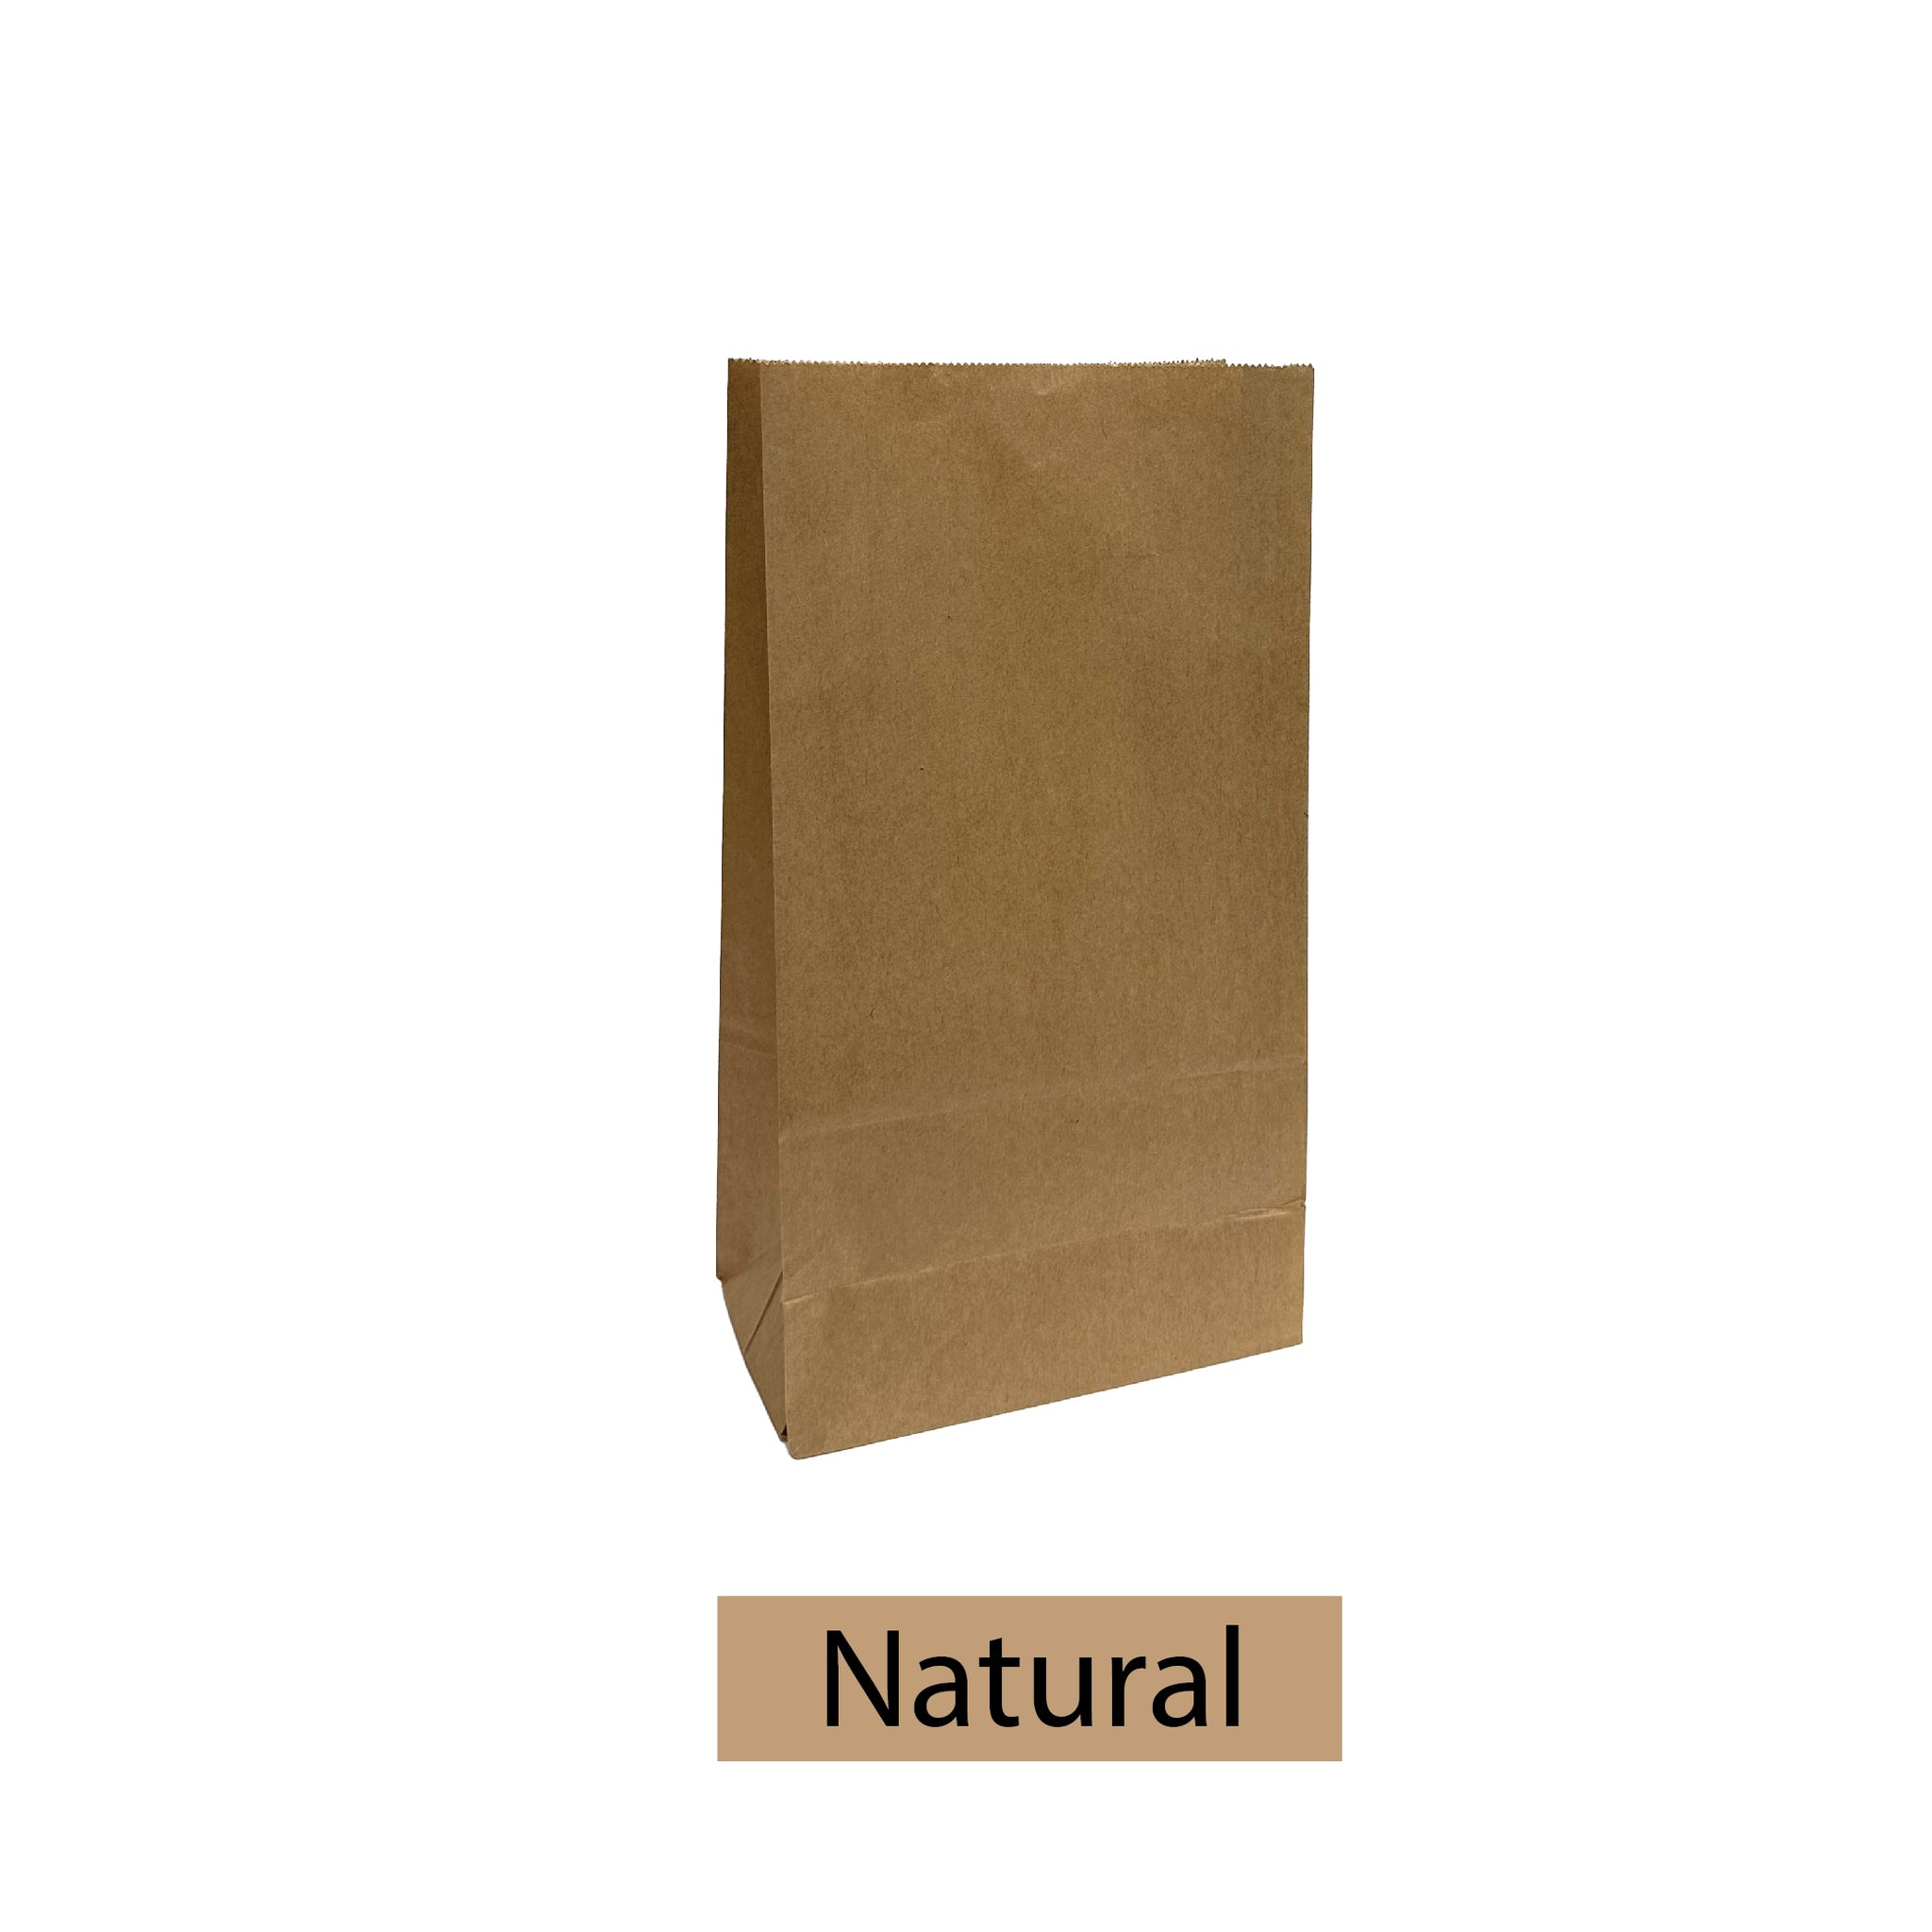 Plain/Blank Kraft SOS Grocery Bag - Bulk 500 pcs per Box - (#8) 6.25"W x 3.75"D x 12.75"H